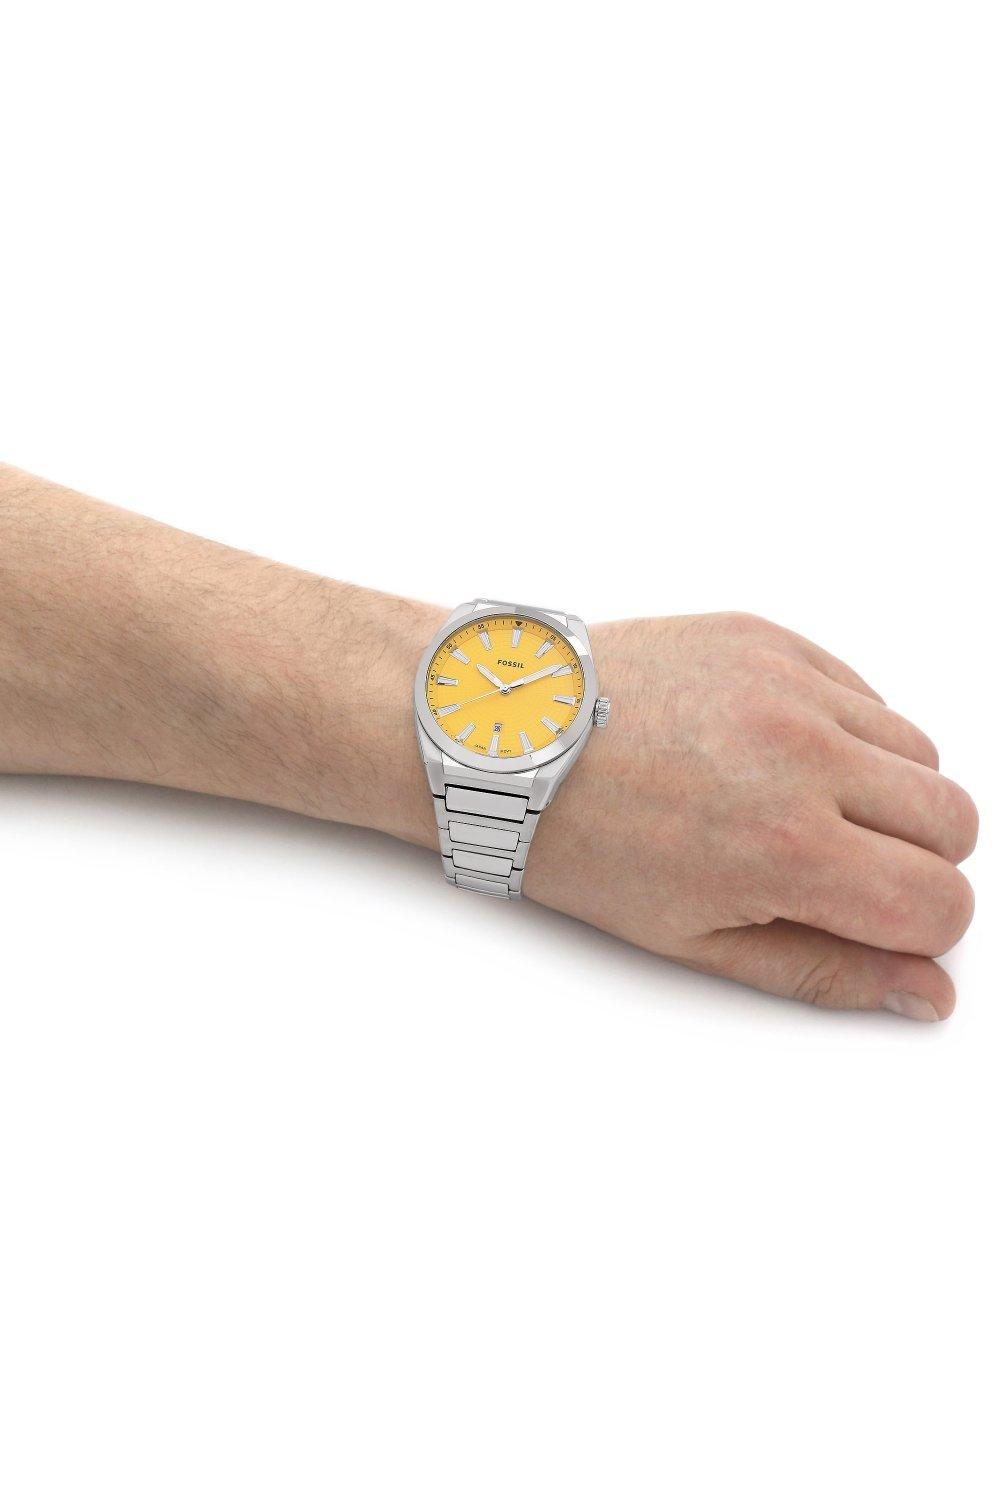 Watches | Everett Stainless Steel Fashion | Fs5985 Quartz Fossil Watch - Analogue